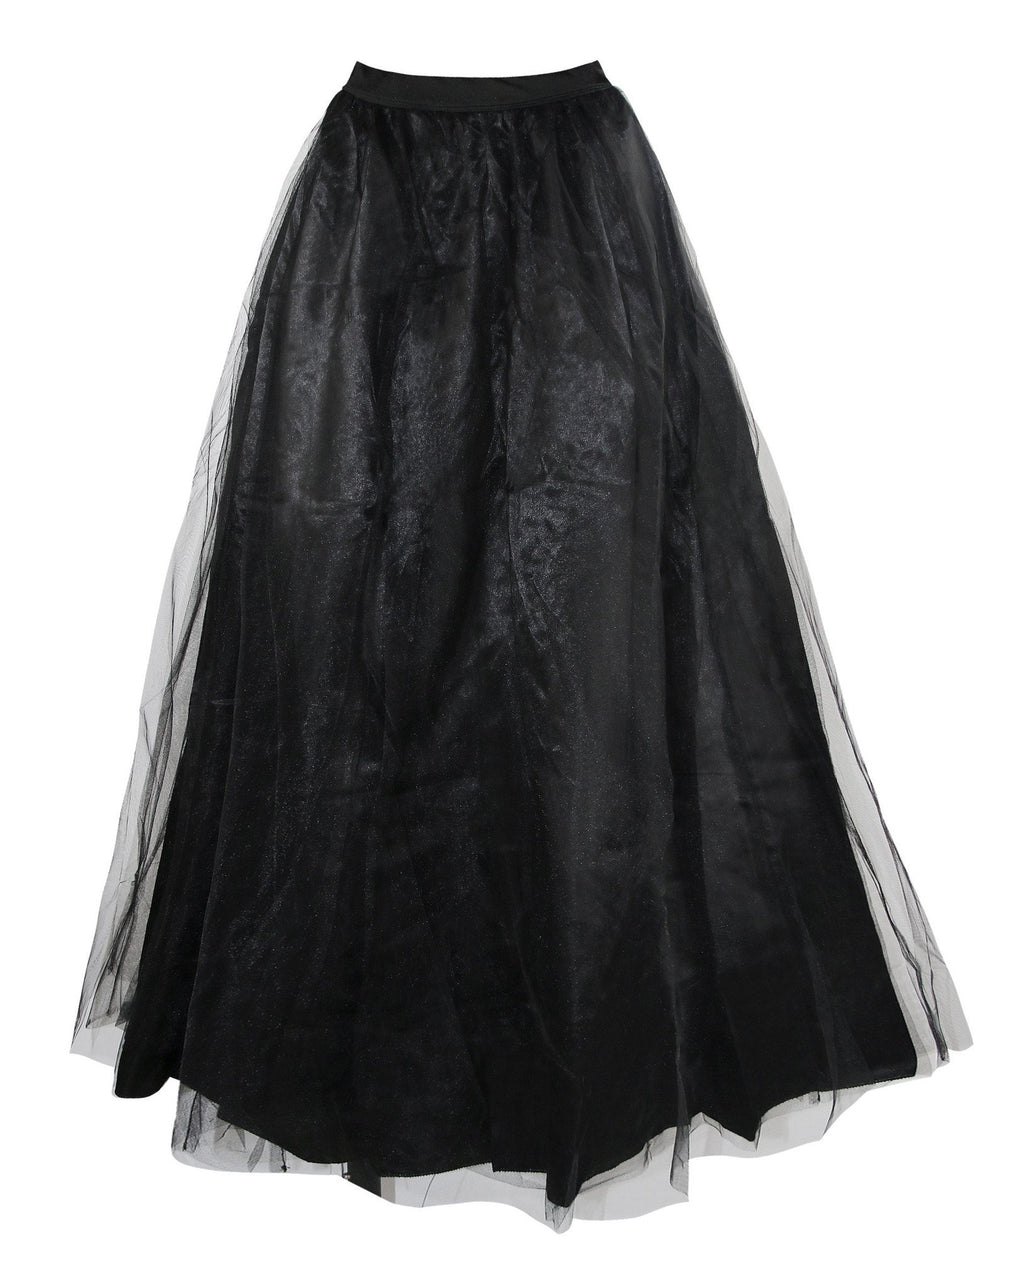 Women's Vintage Layered Tulle High Waisted Maxi Tutu Skirt Dress